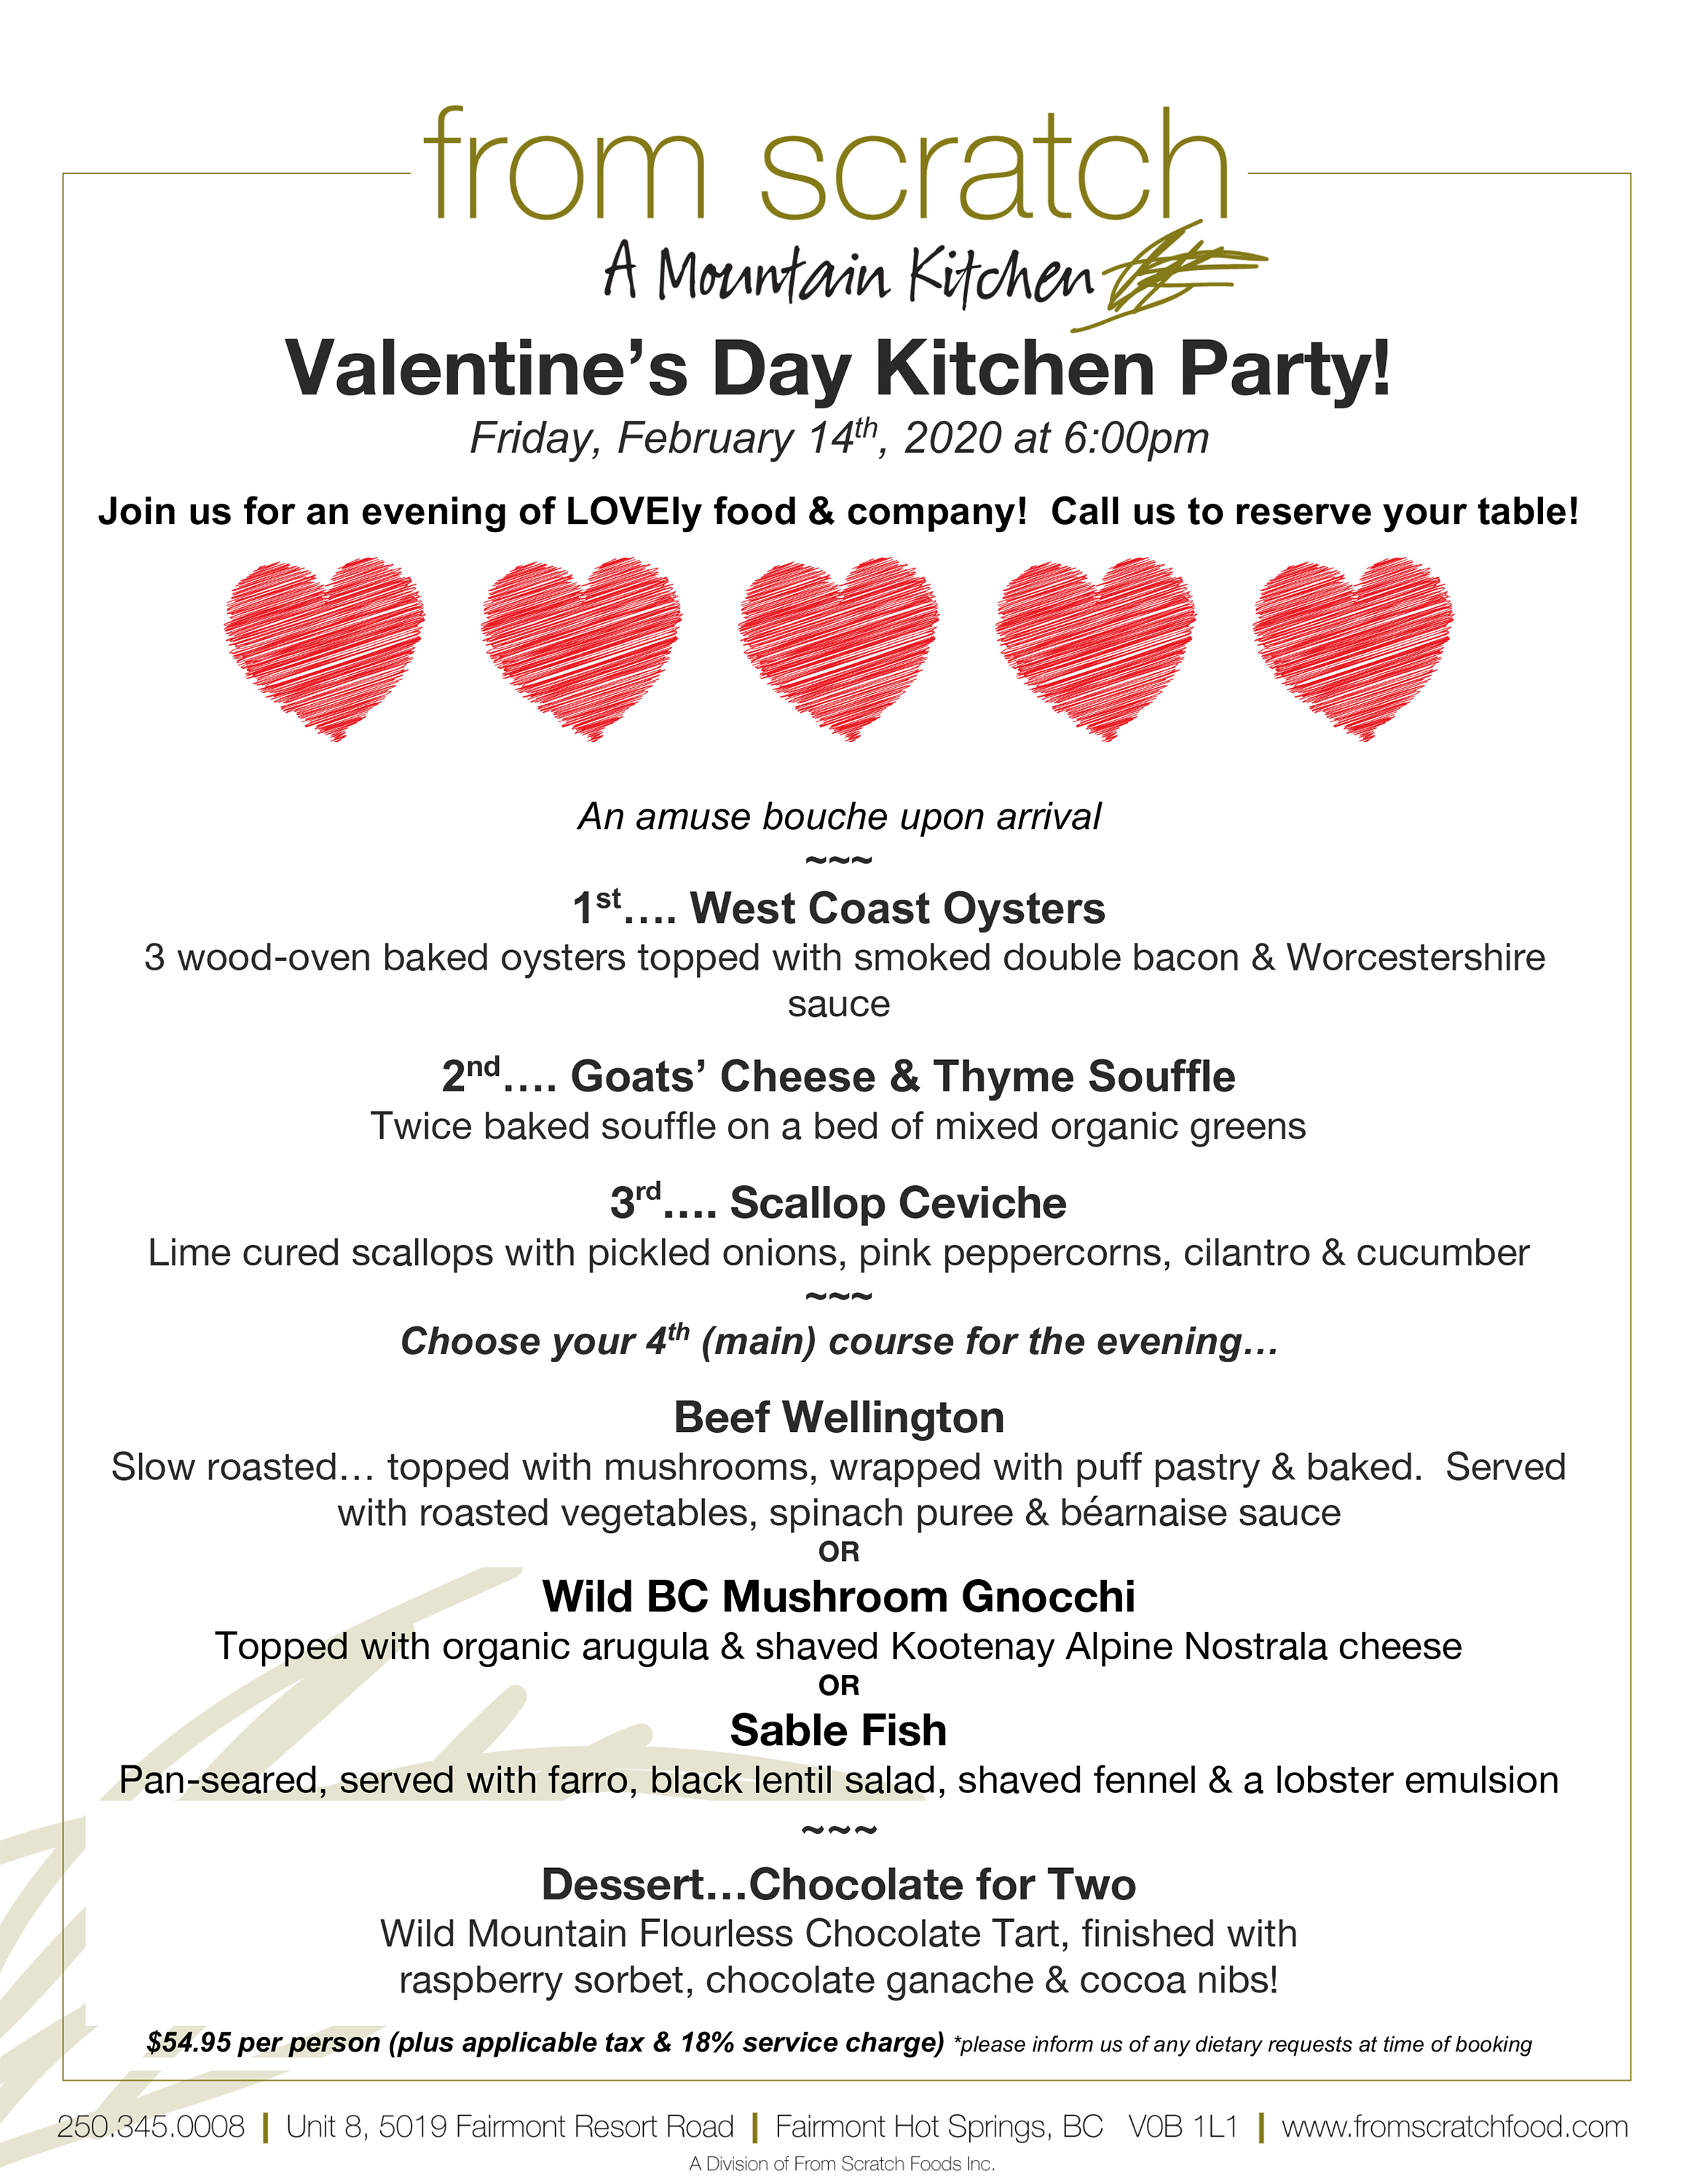 From Scratch Valentines Day menu